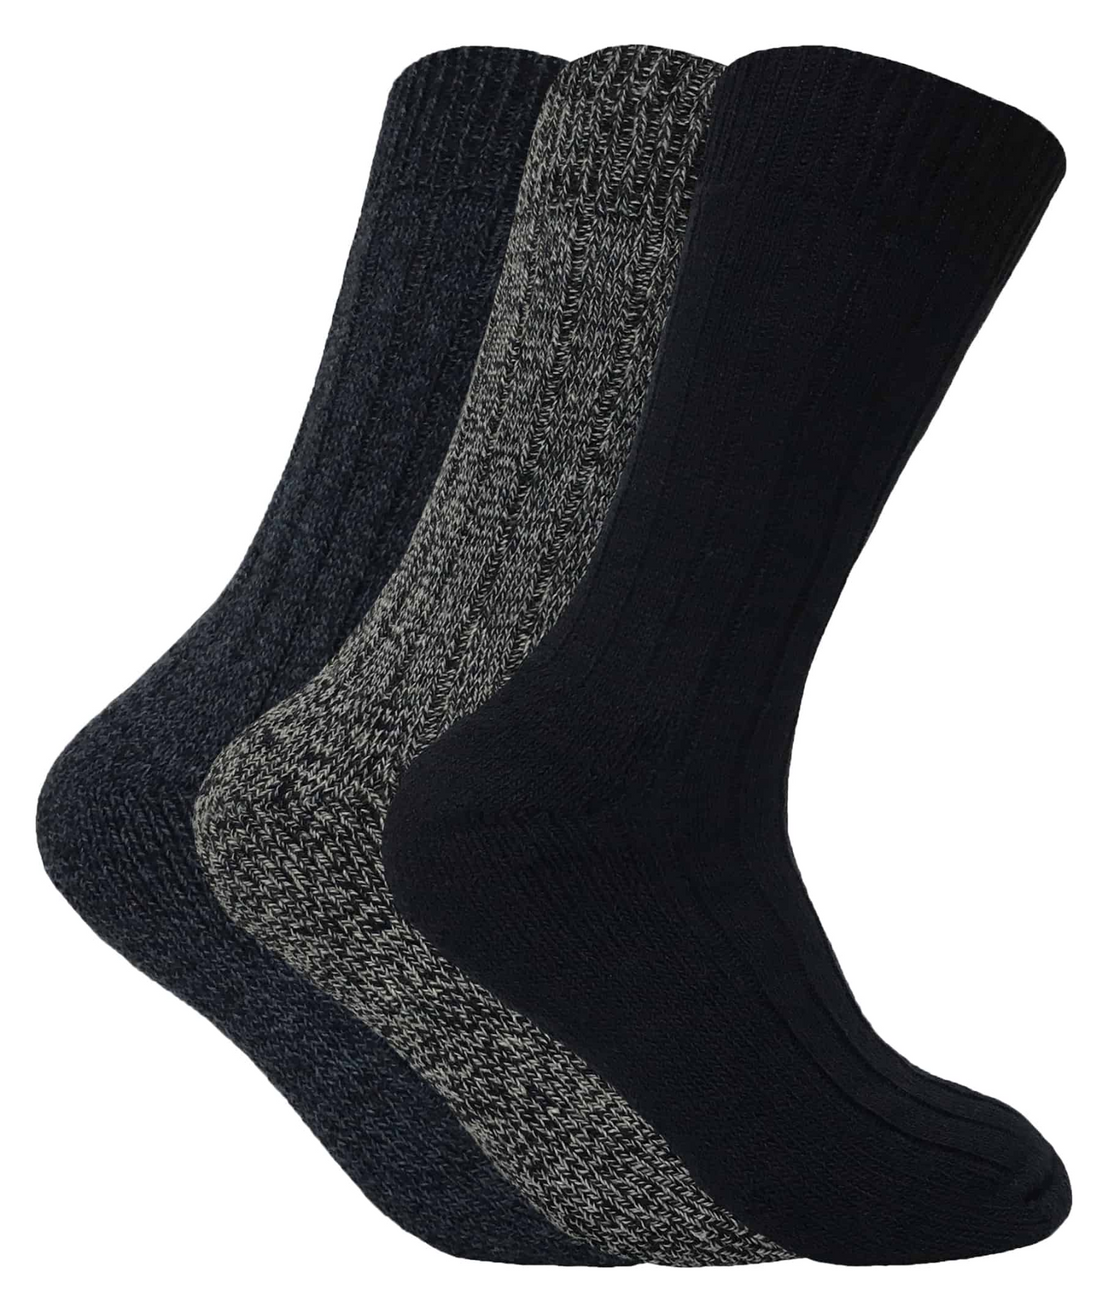 3 Pairs Mens Thick Warm Wool Blend Hiking Socks